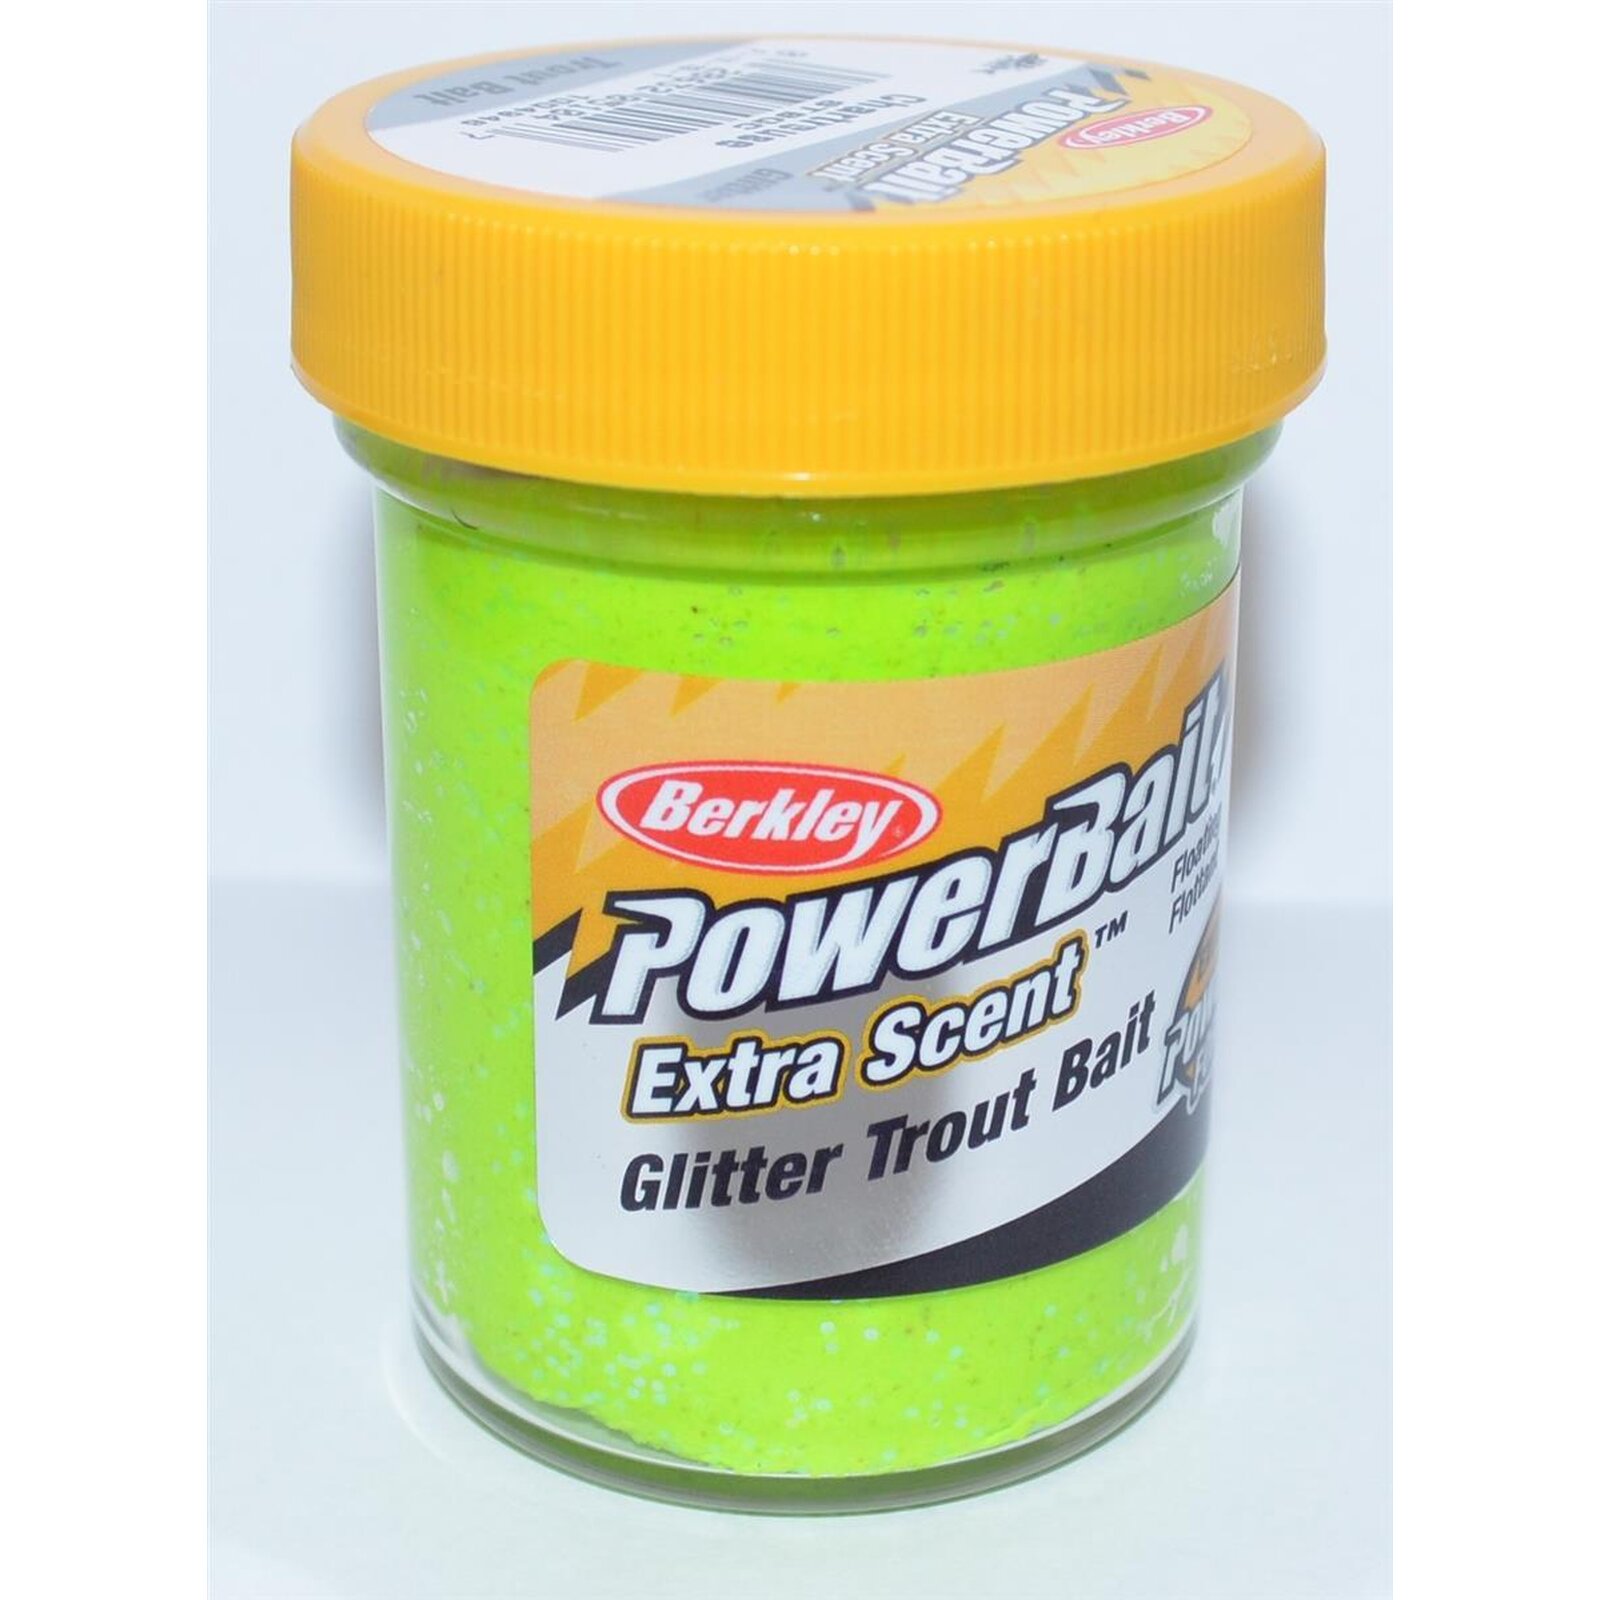 Berkley Trout Bait Extra Scent Glitter Chartreuse - 50g